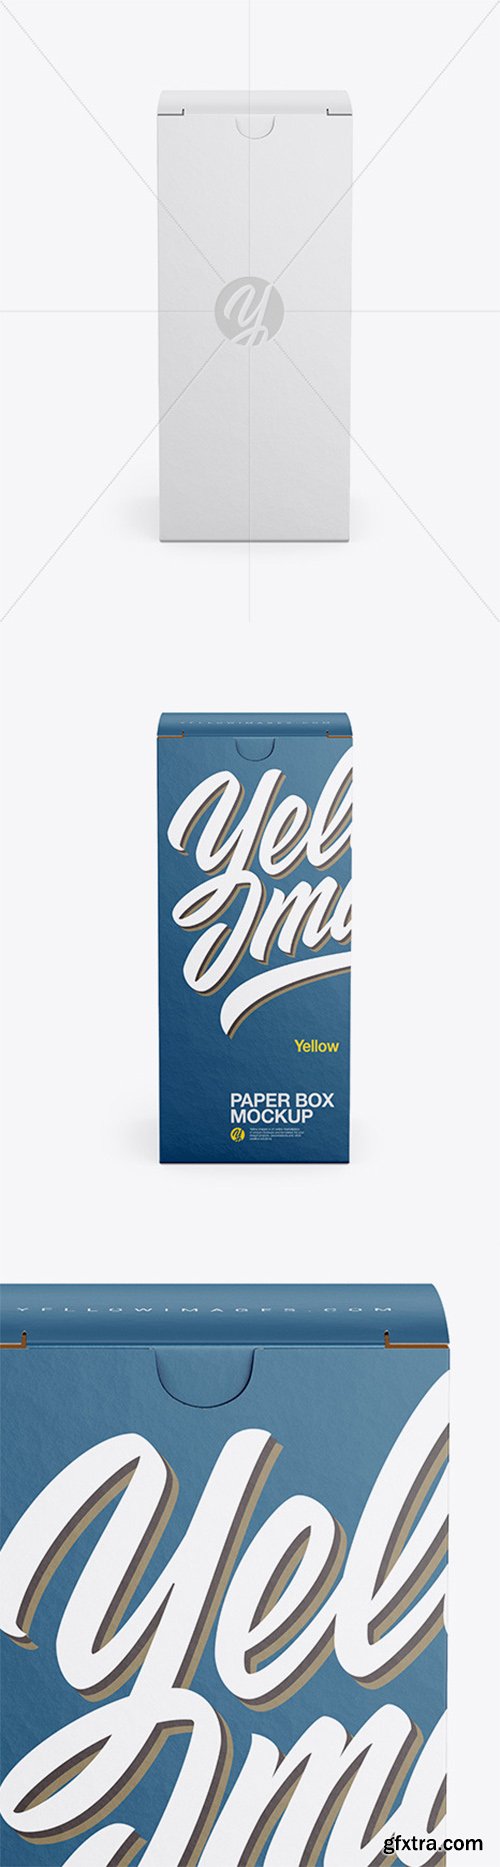 Paper Box Mockup - Front View 55460